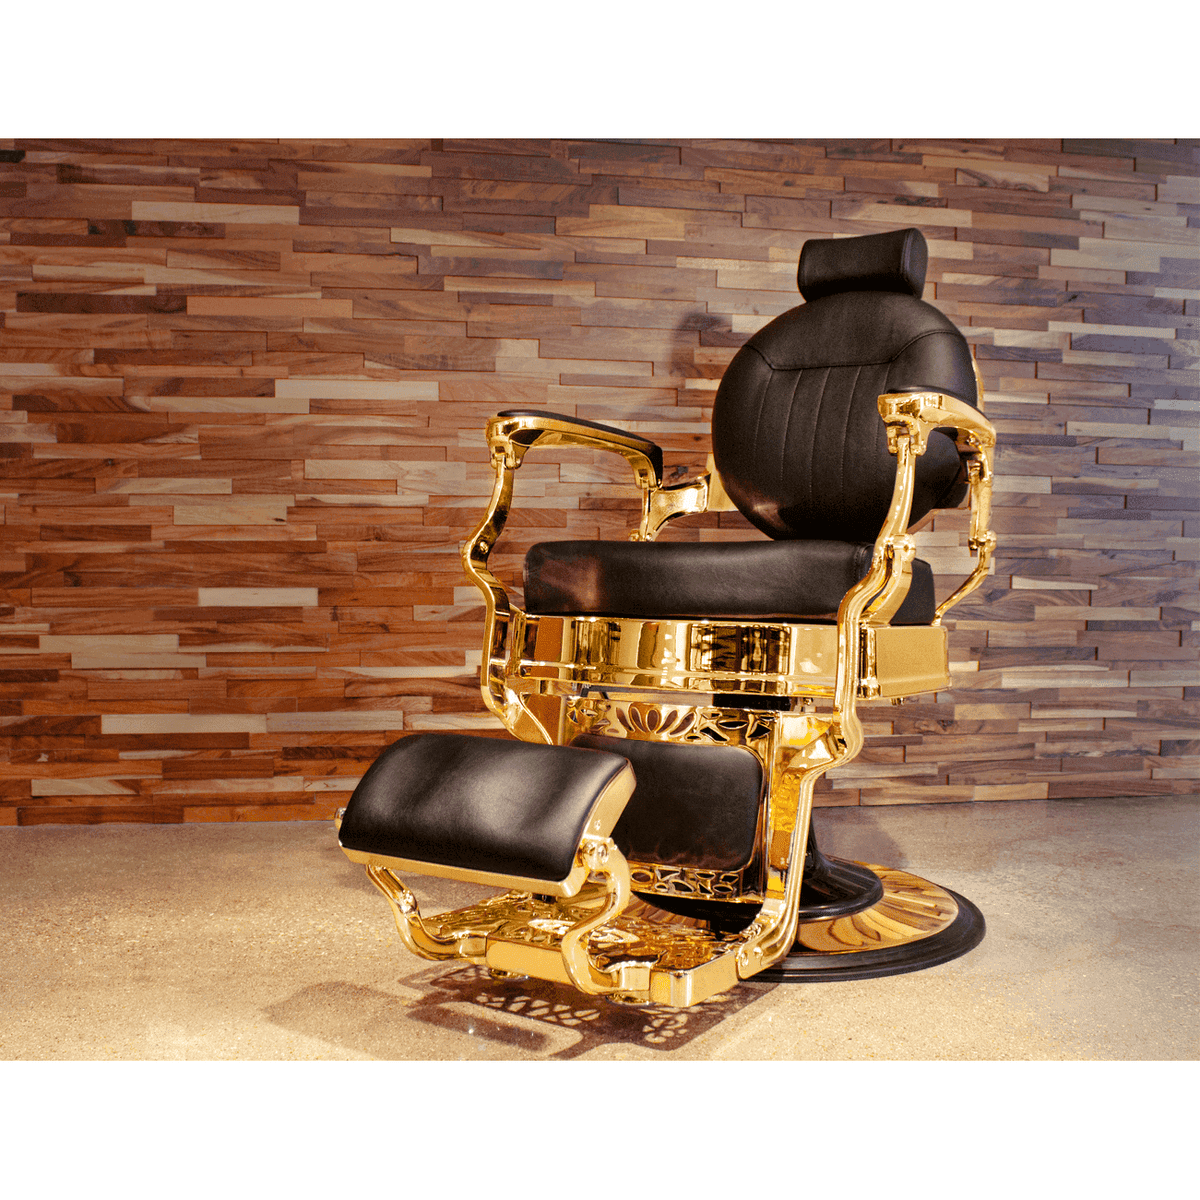 McKinley Barber Chair